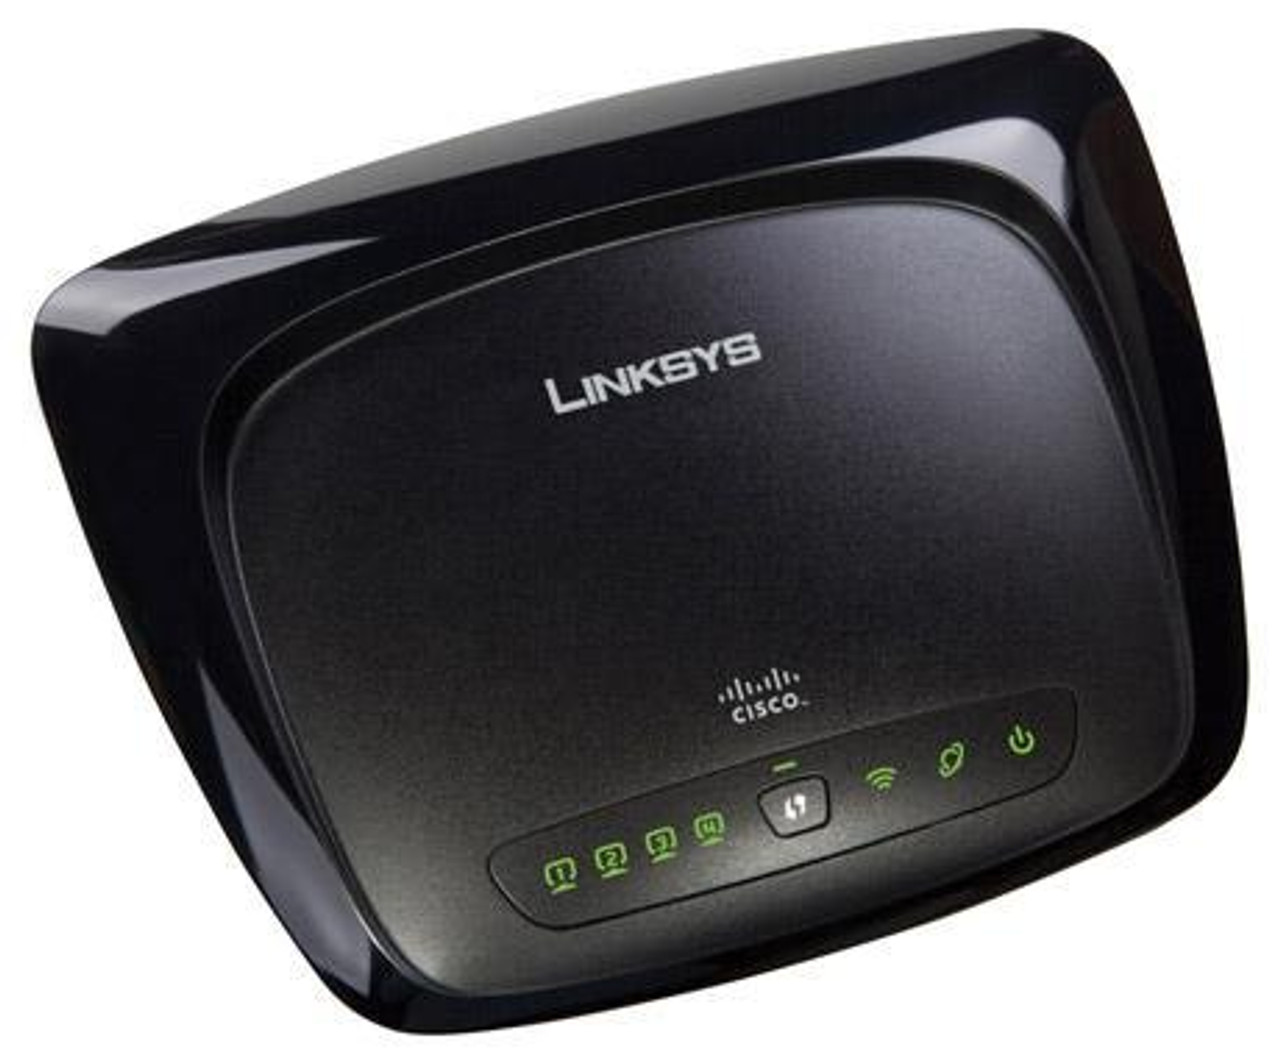 WRT54G2 - Linksys Wireless-G Broadband Router 802.11g